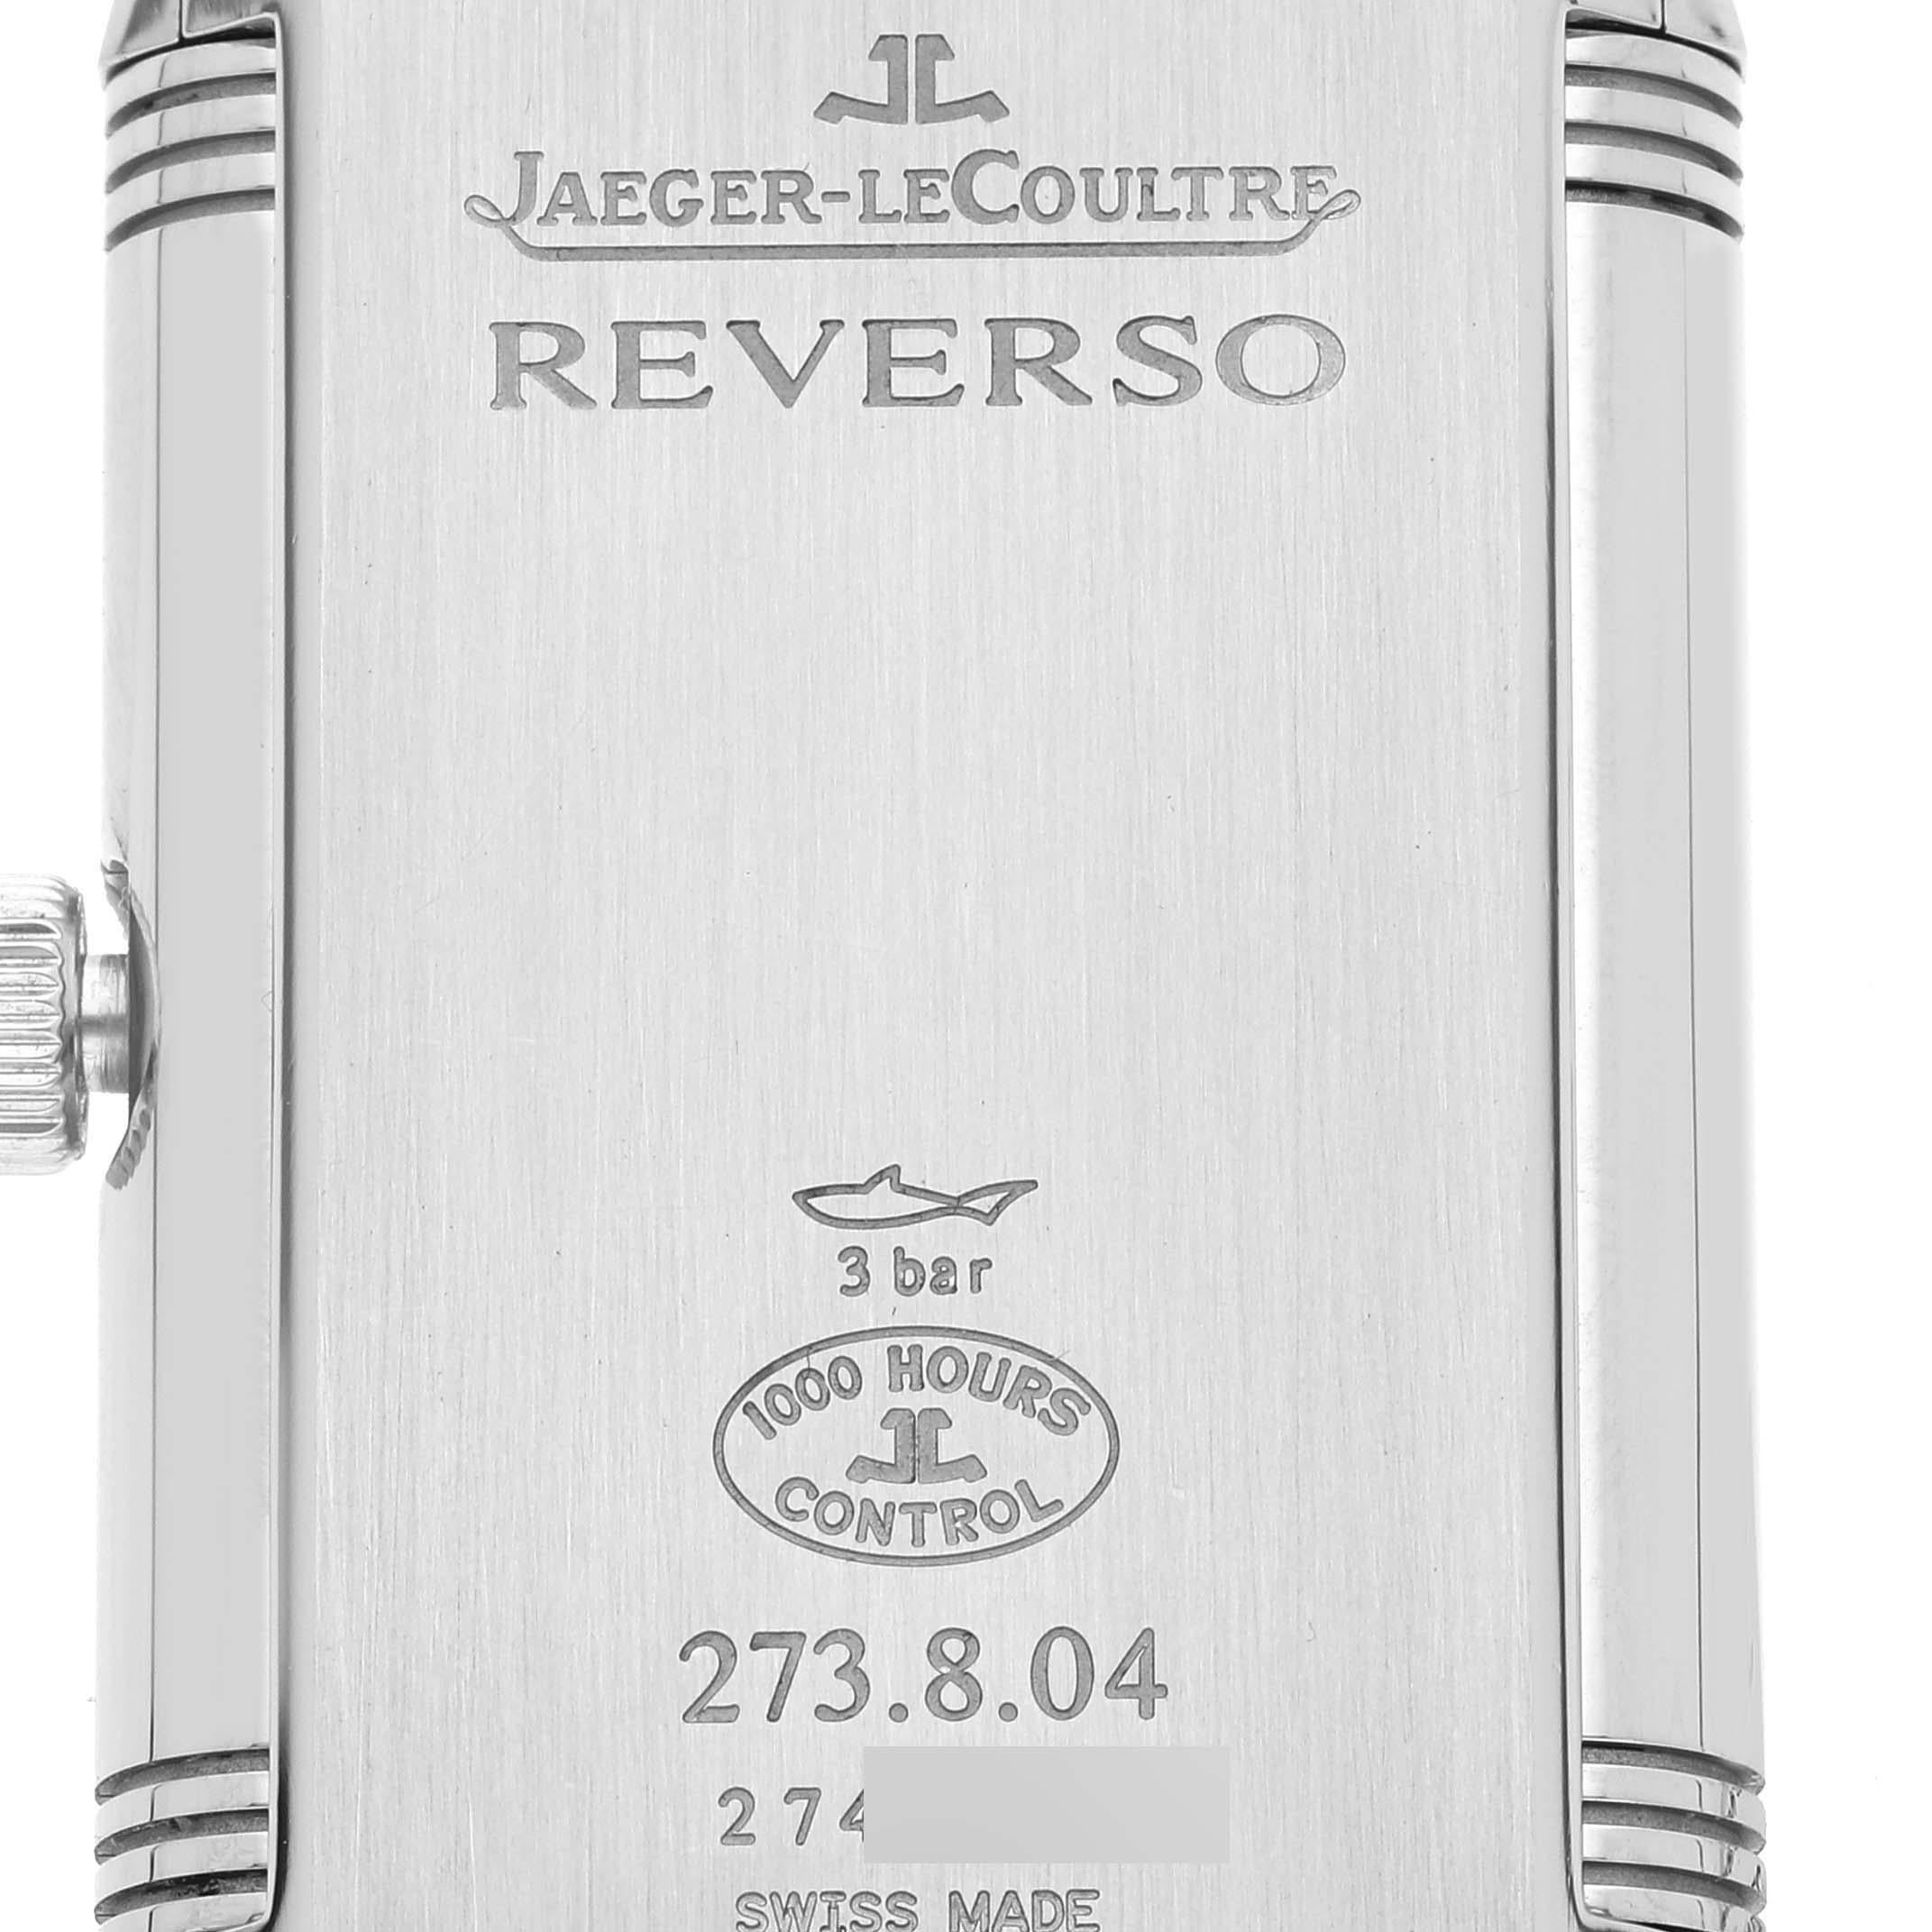 Jaeger LeCoultre Reverso Grande Steel Mens Watch 273.8.04 Q3738420 4